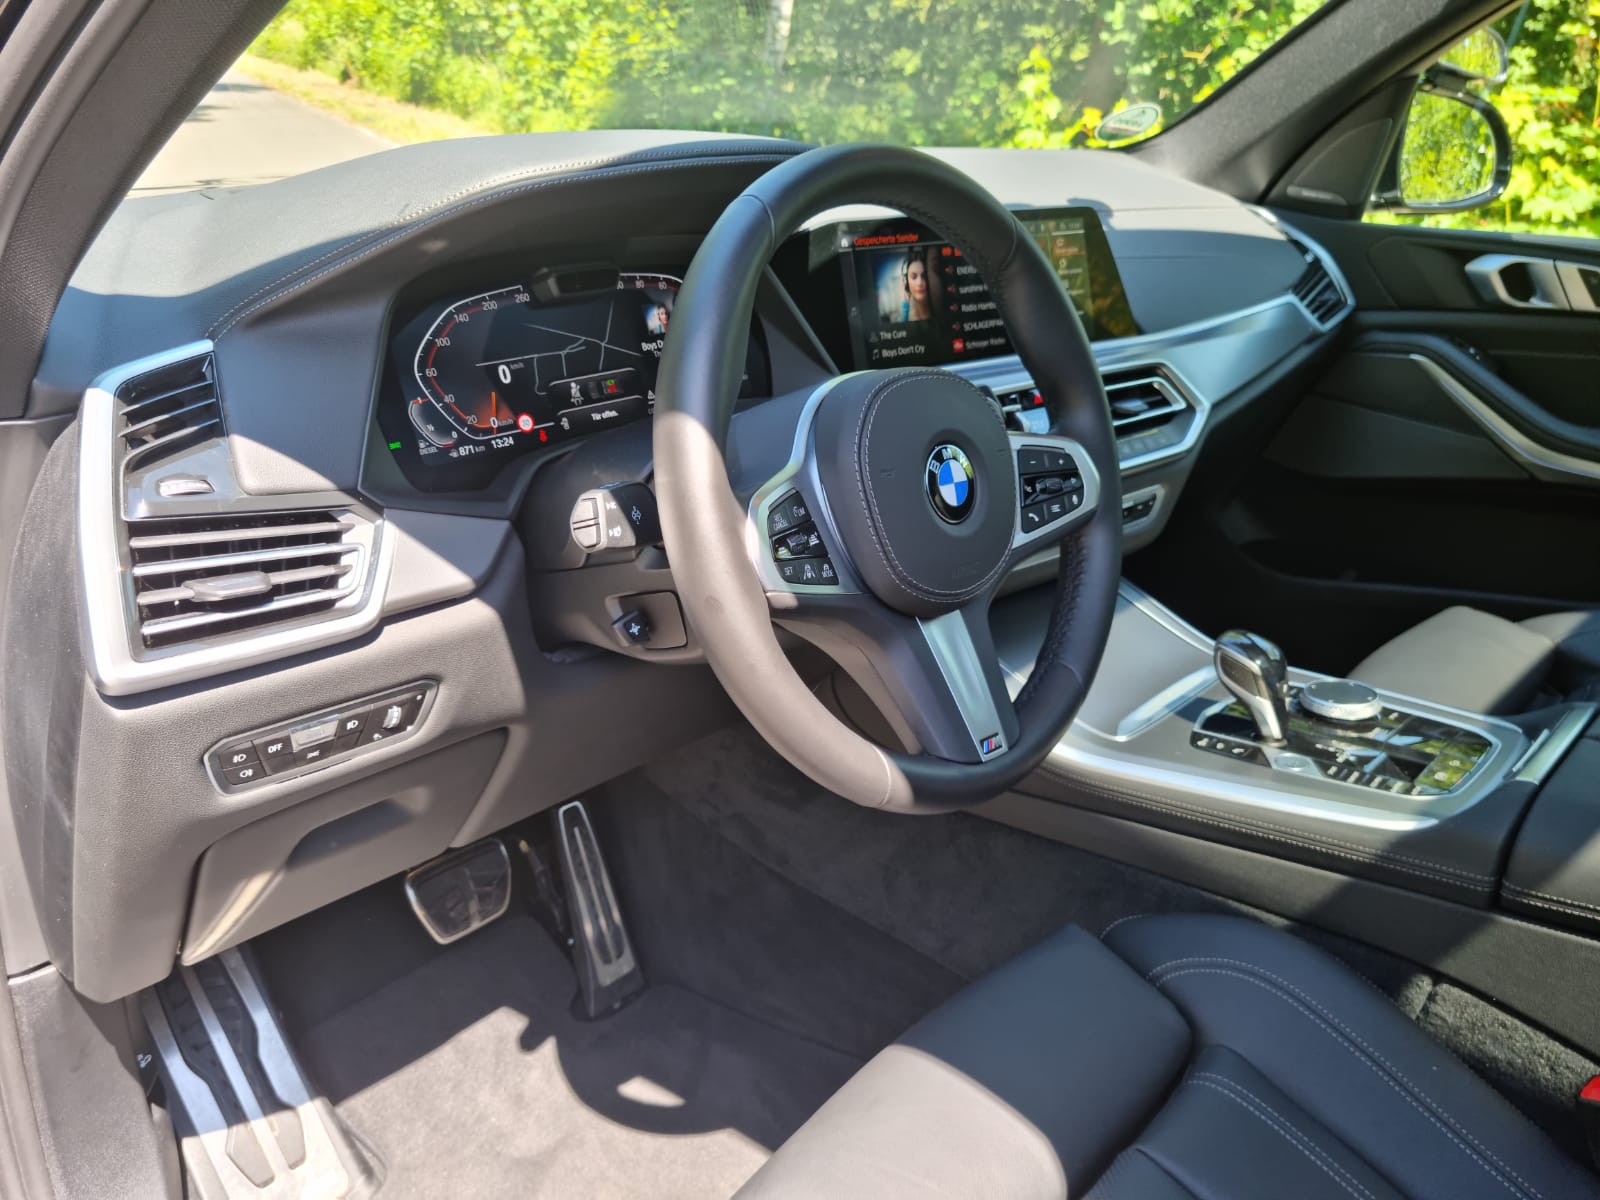 BMW Innenraum